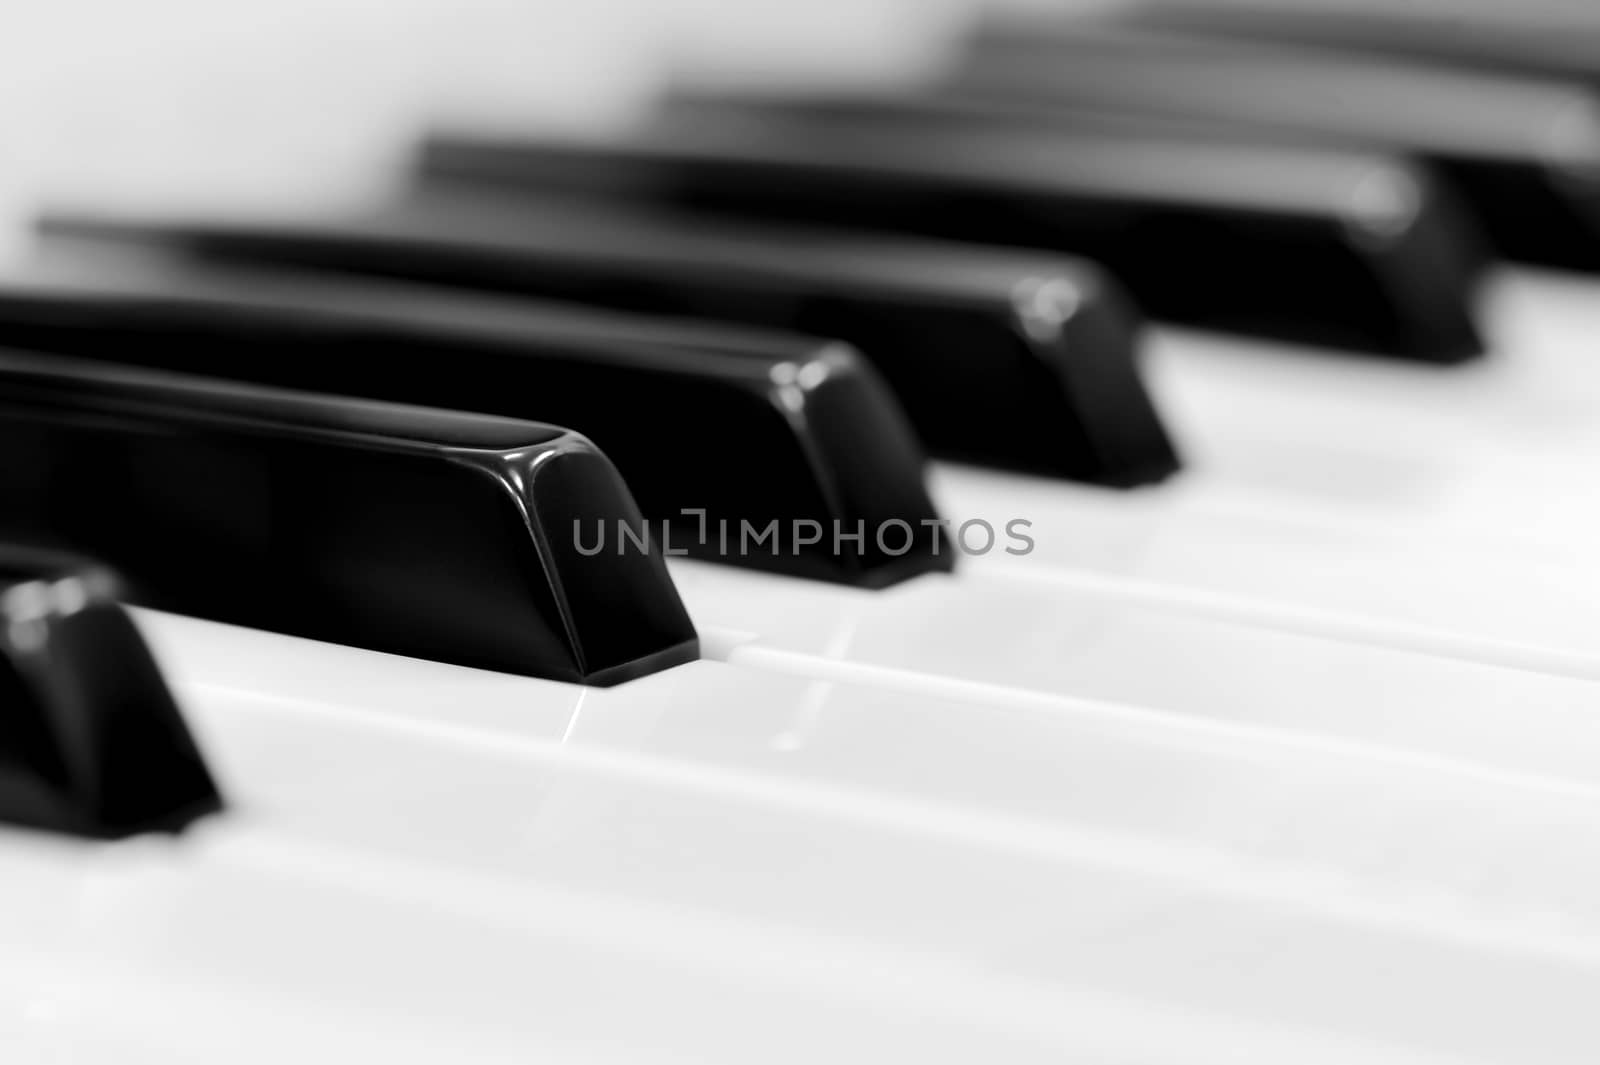 Close-up of piano keys by byrdyak